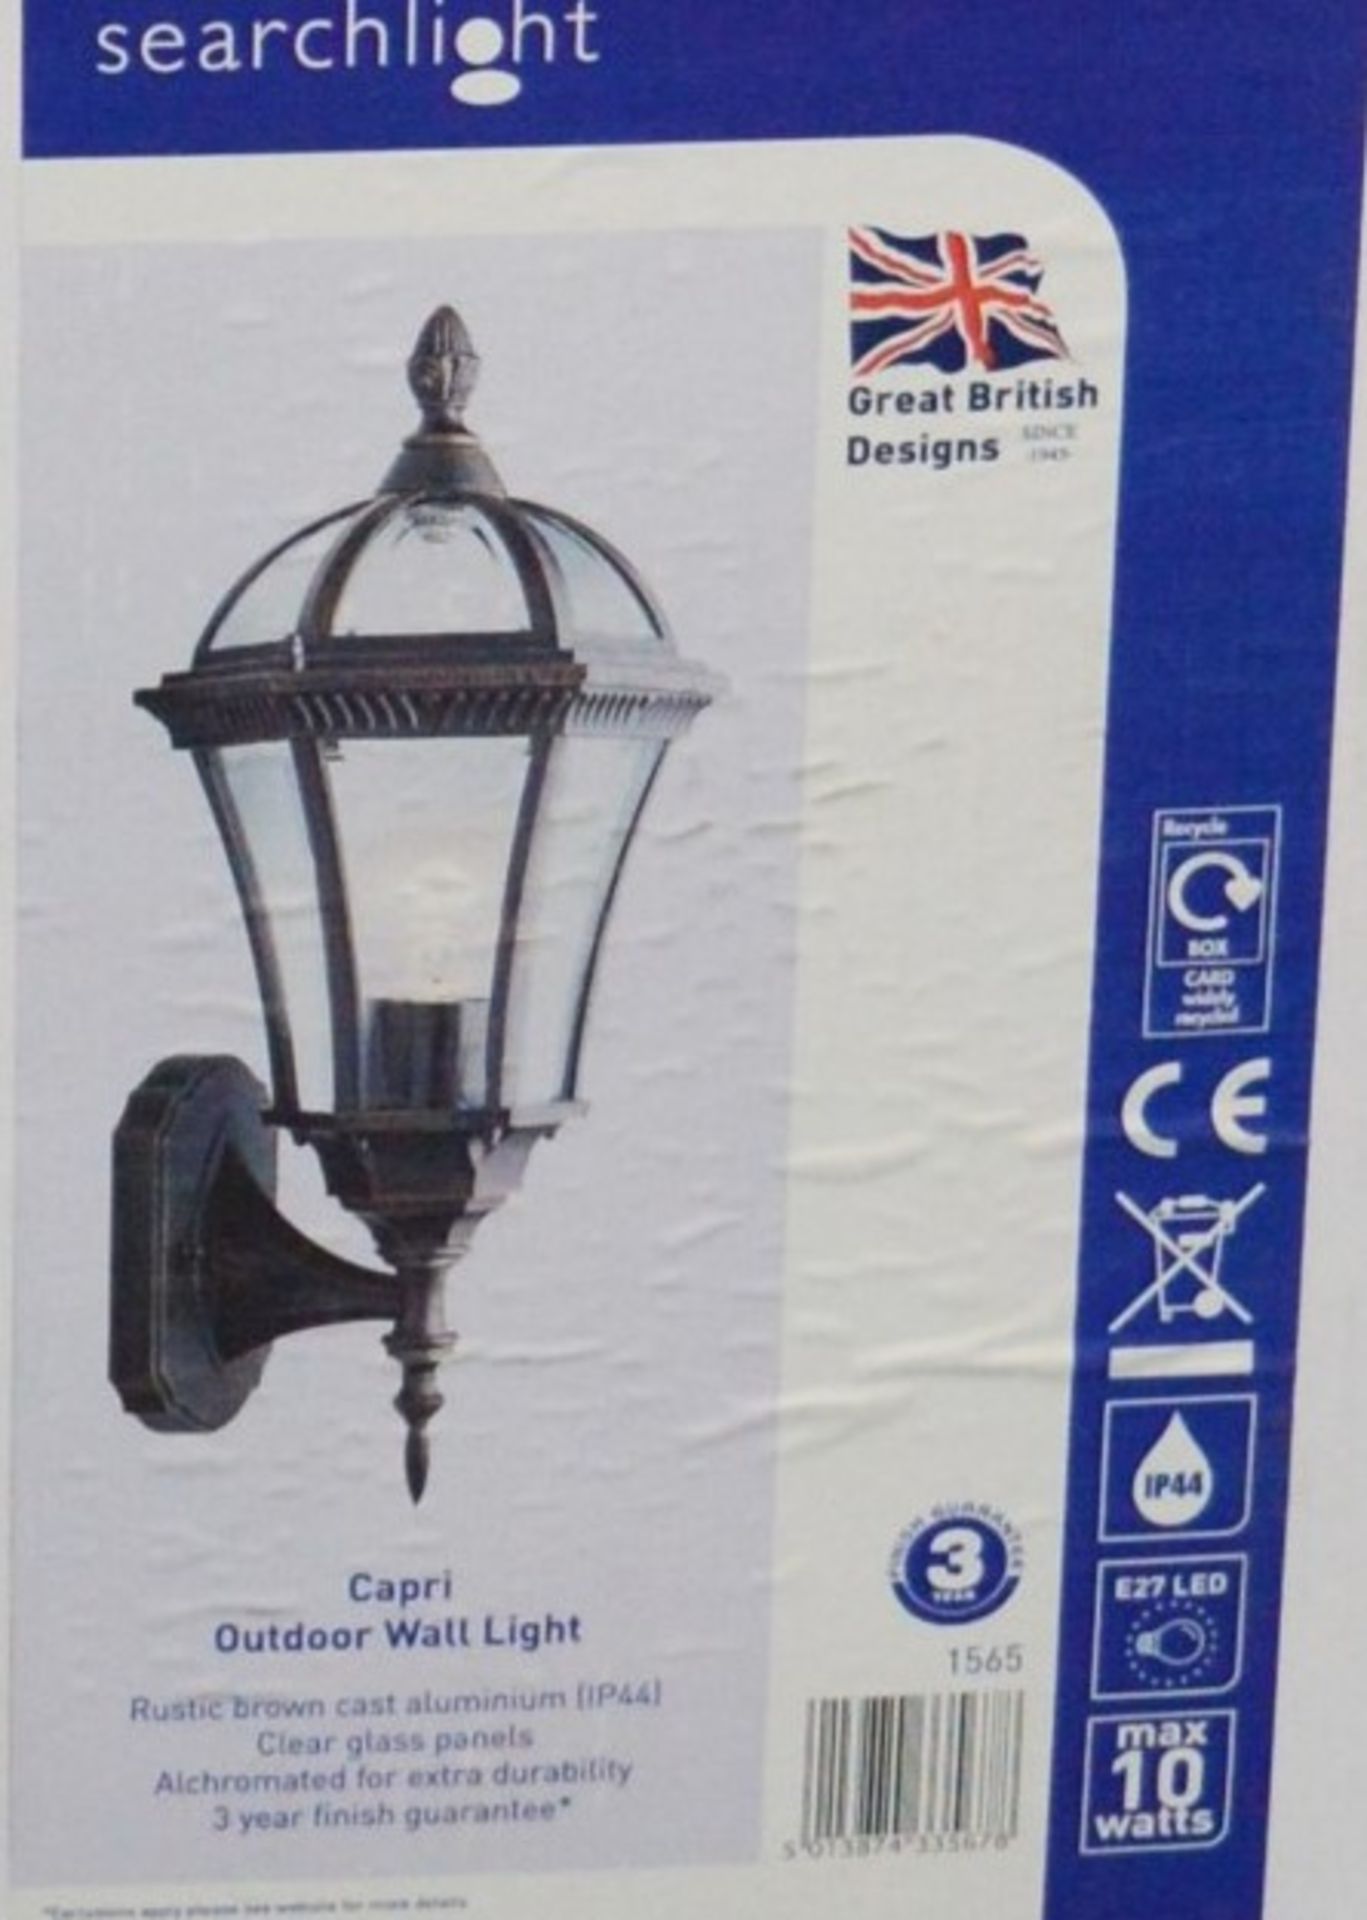 5 x Searchlight Capri Outdoor Wall Lights - Rustic Brown Cast Aluminium IP44 Product Code 1565 - New